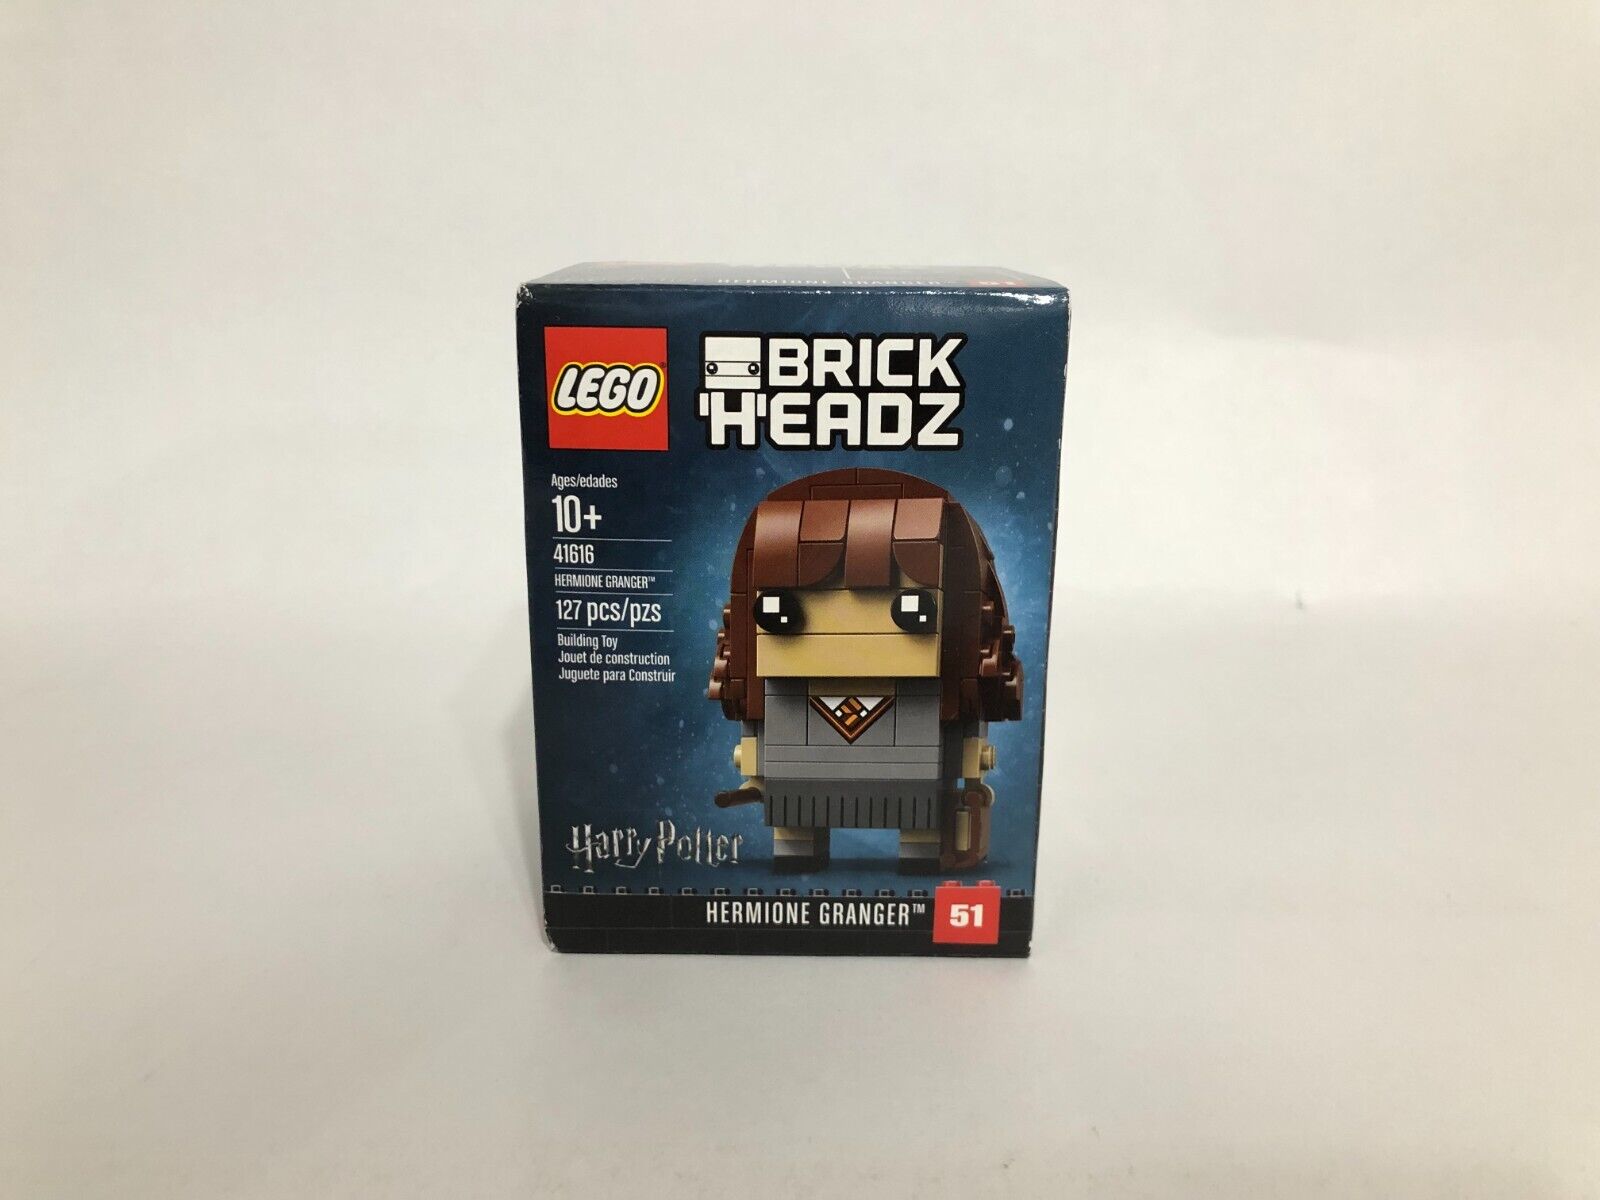 LEGO BrickHeadz 41616 Hermione Granger - NEW - SEALED - RETIRED